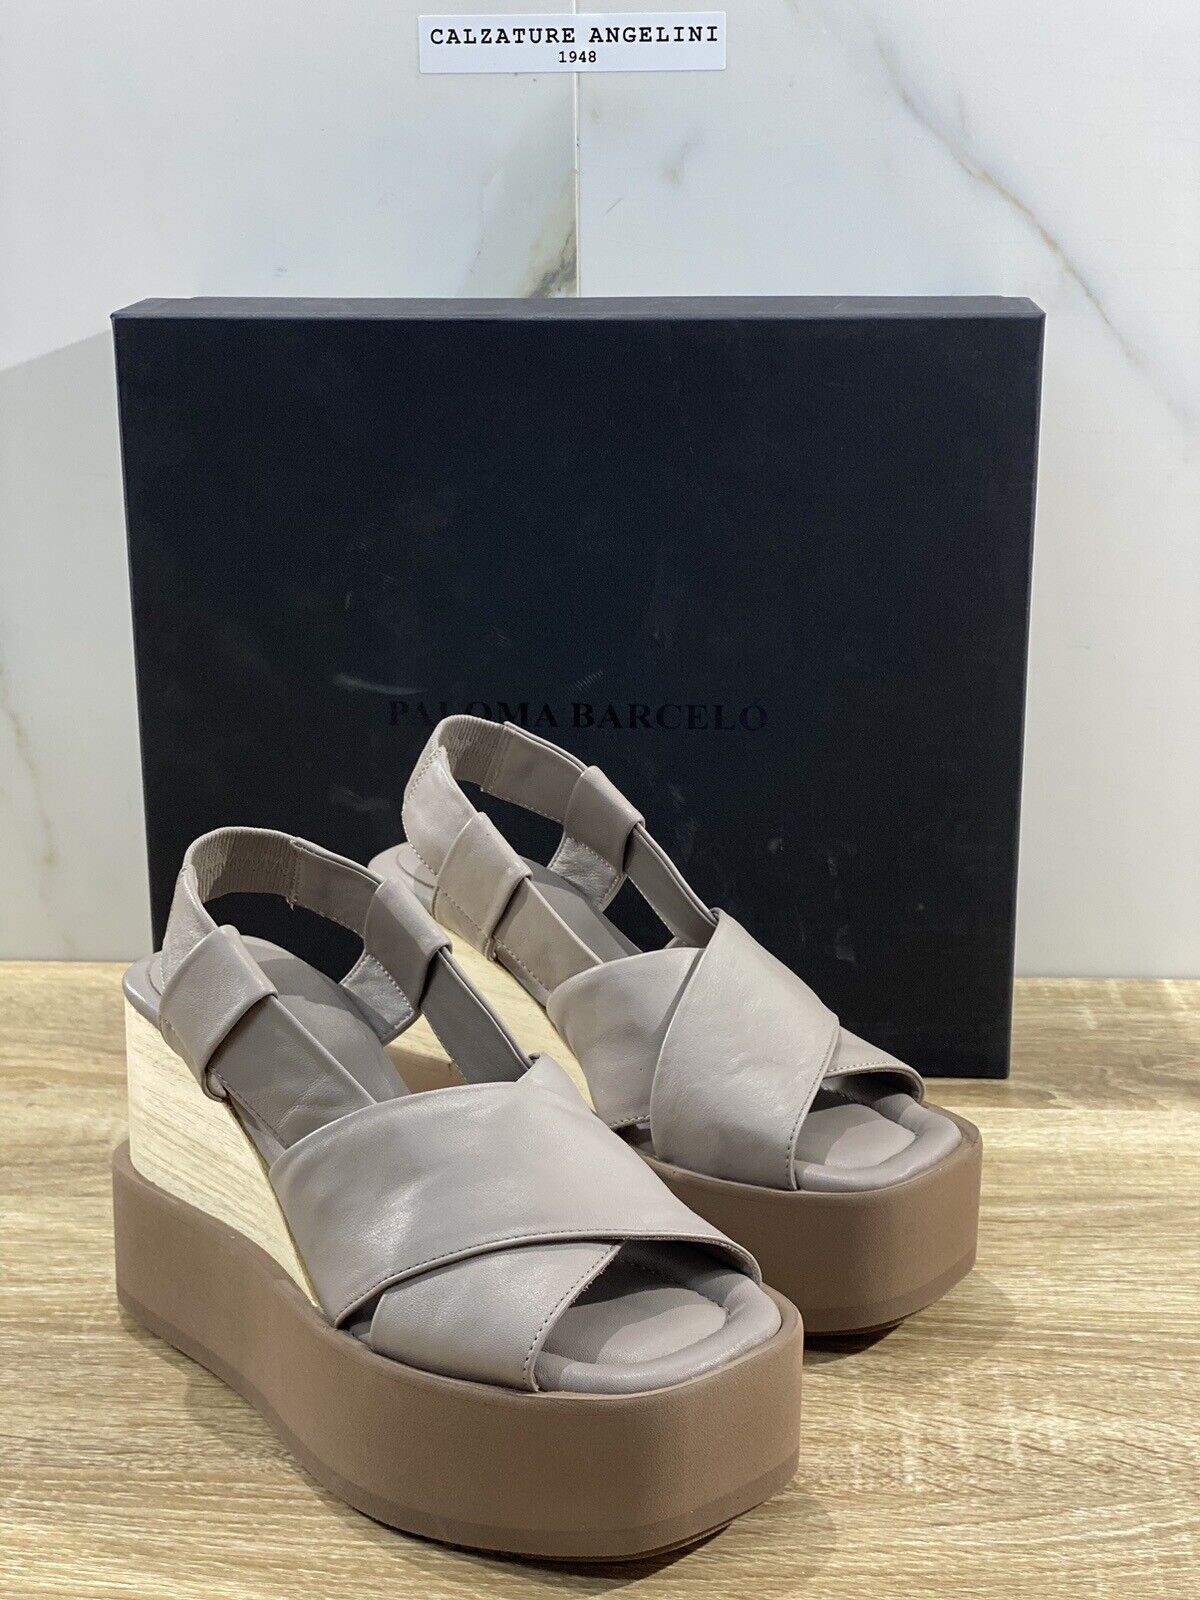 Paloma BARCELO’ Sandalo Donna Mao Pelle Tortora Luxury Shoes 37